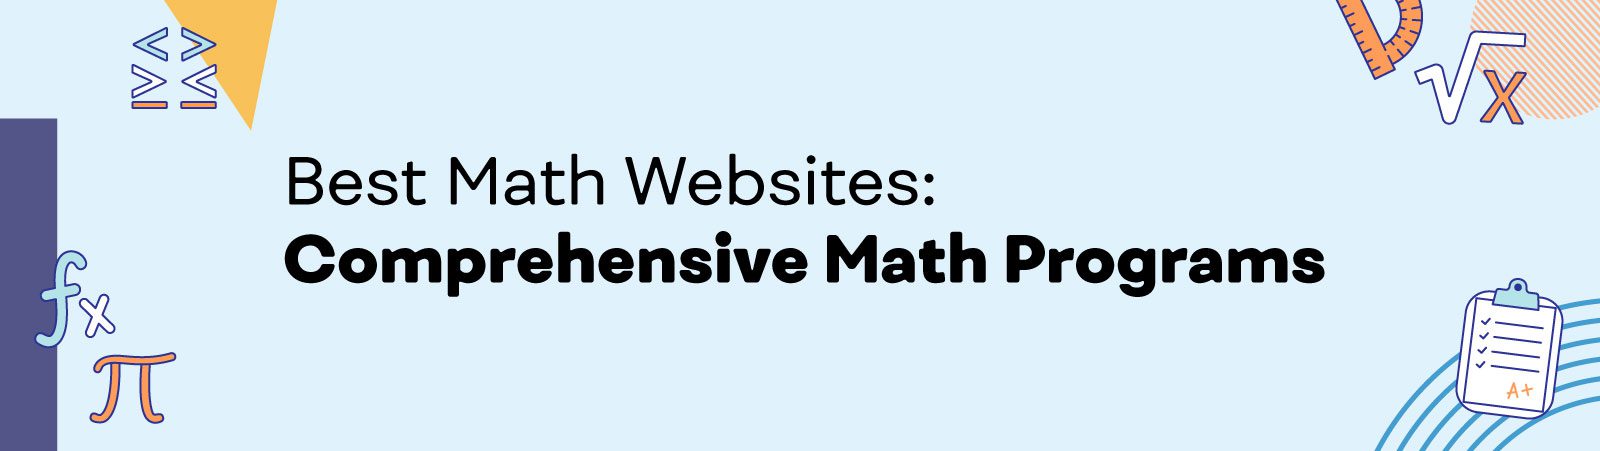 Best math websites: Comprehensive math programs.